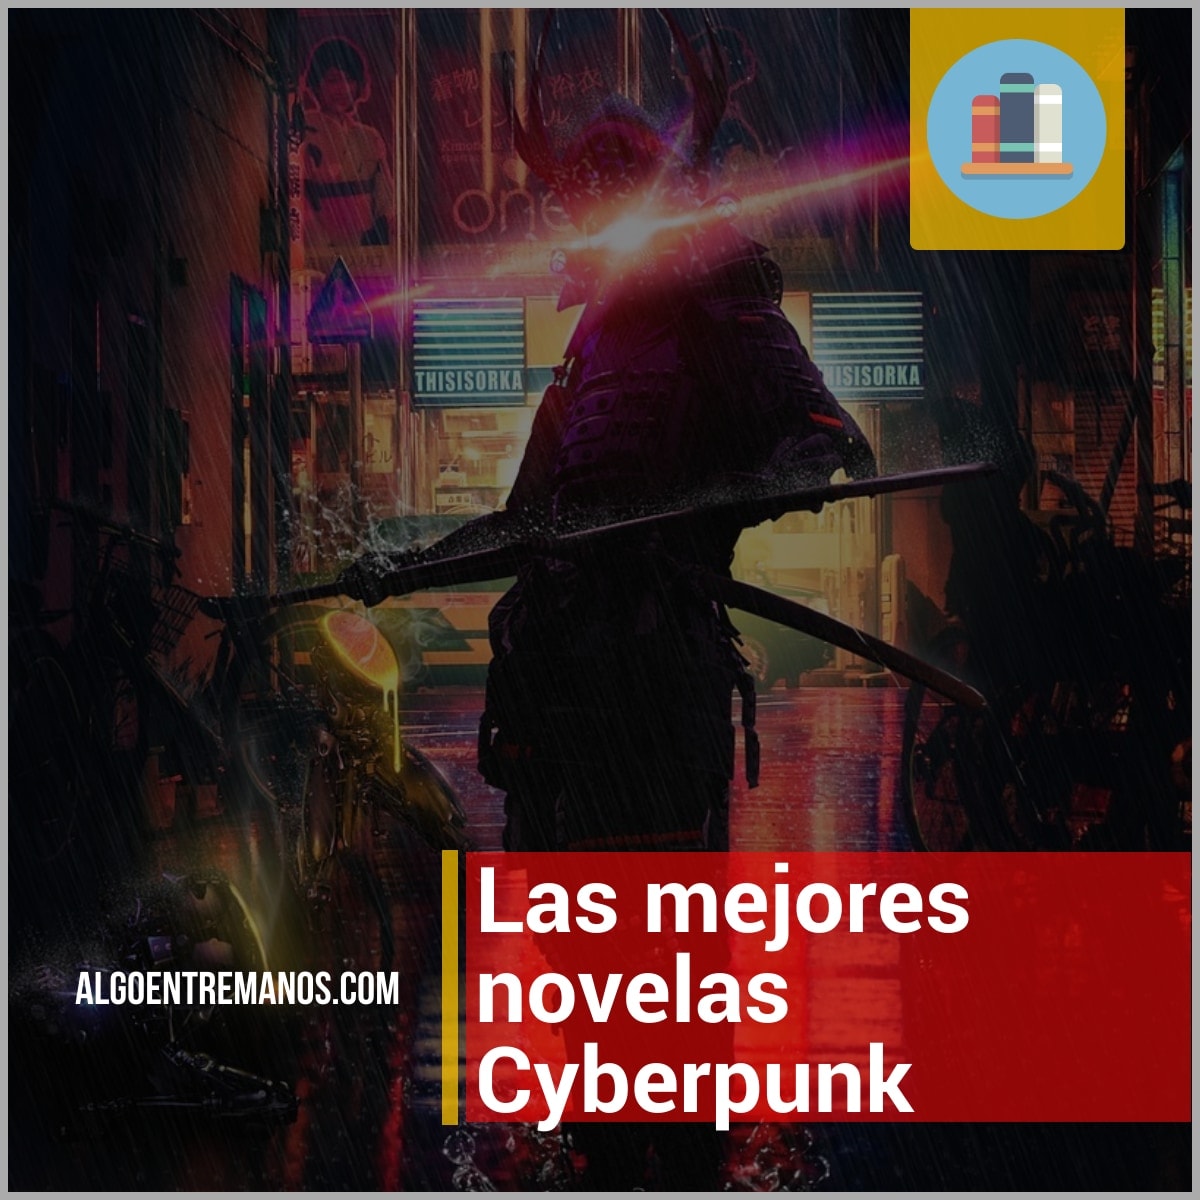 Las mejores novelas Cyberpunk